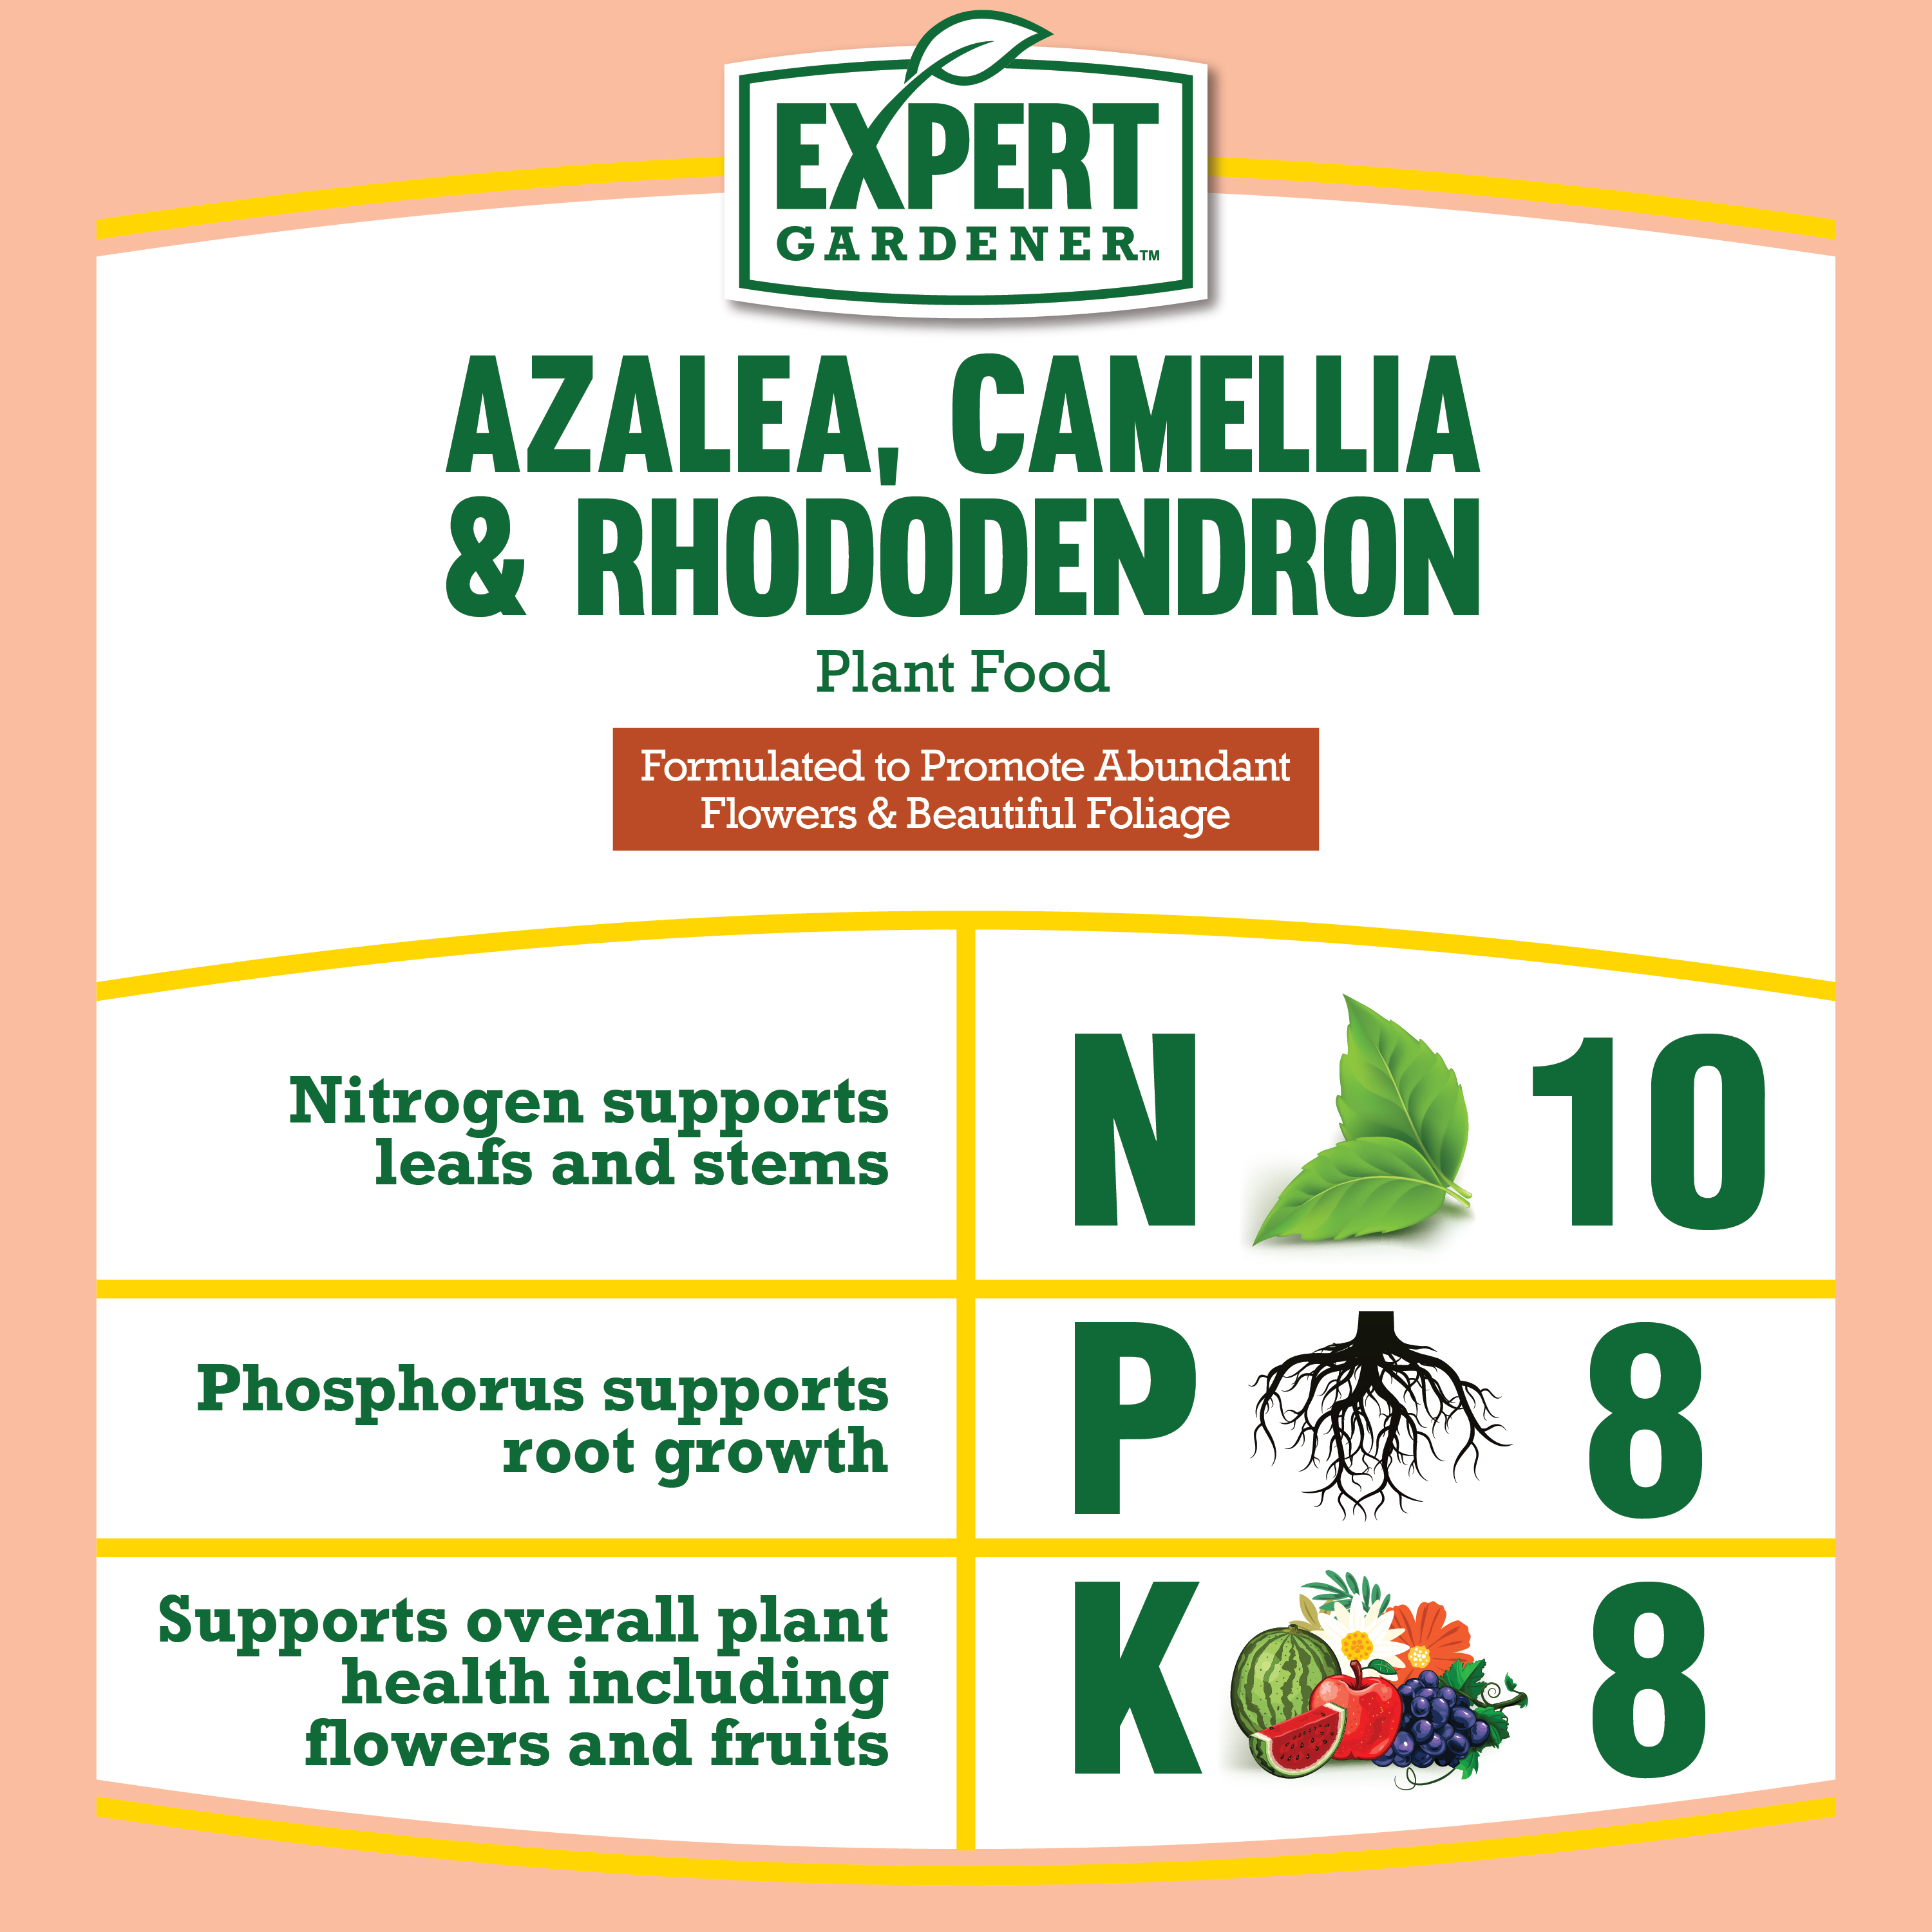 Expert Gardener Azalea, Camellia & Rhododendron Plant Food Fertilizer 10-8-8, 4 lb. - image 5 of 8